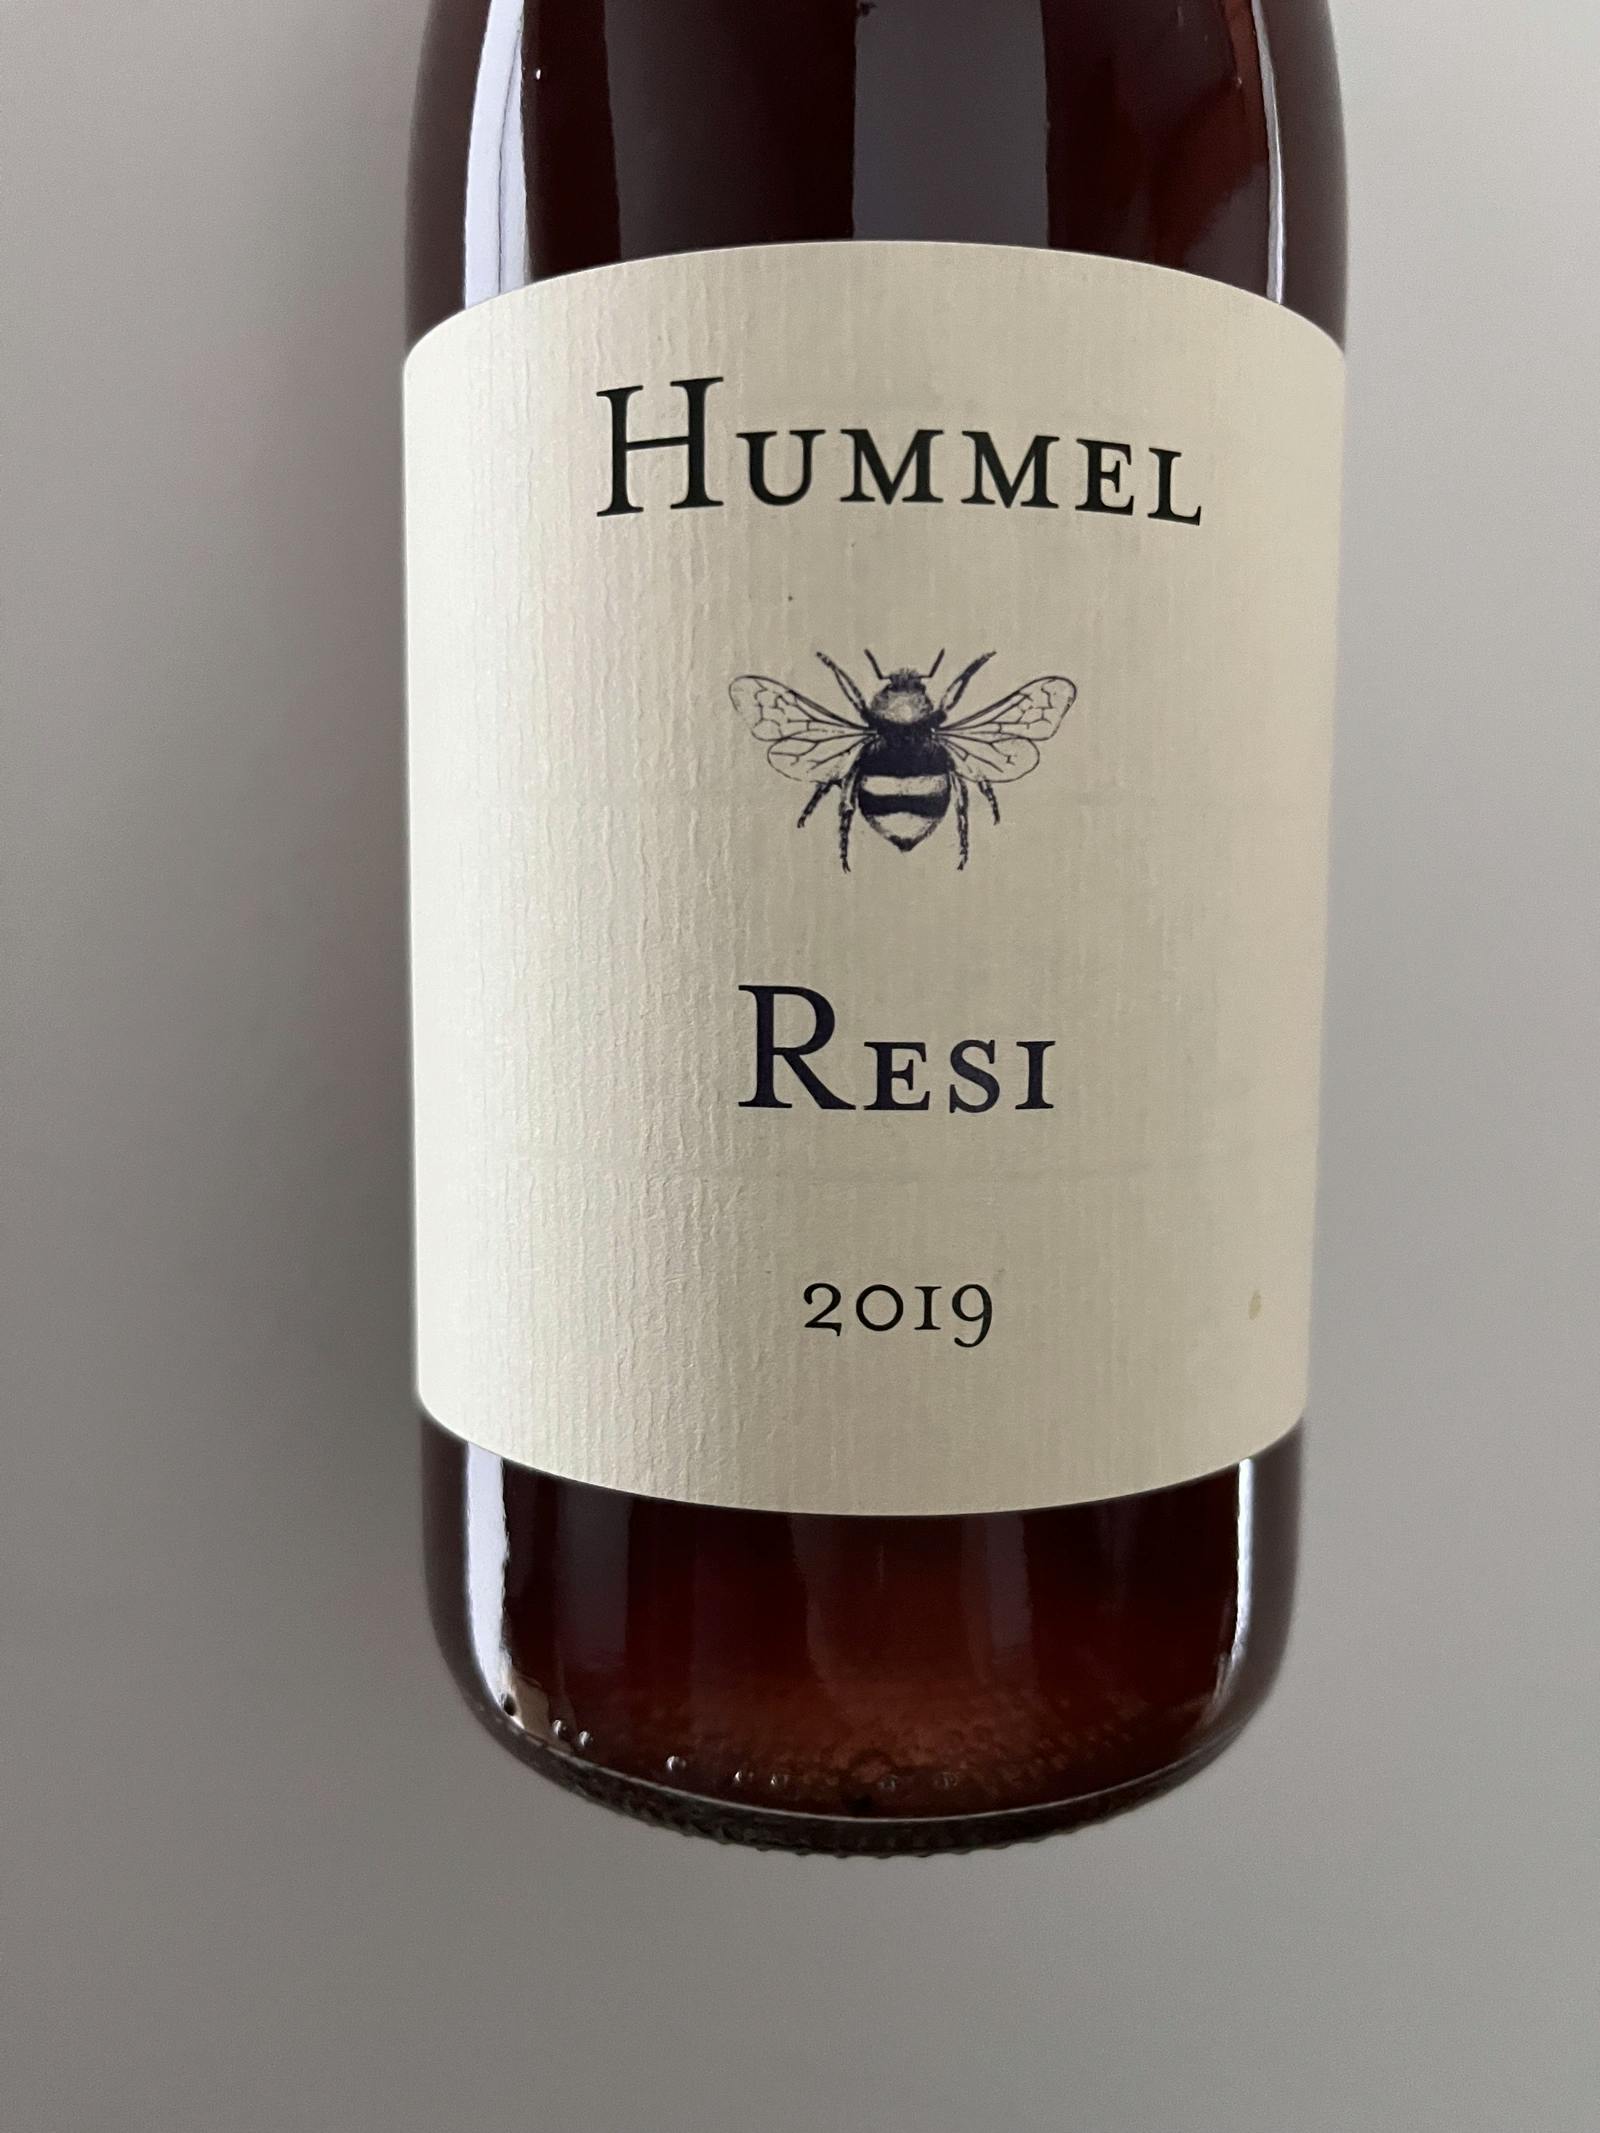 Hummel Resi 2019